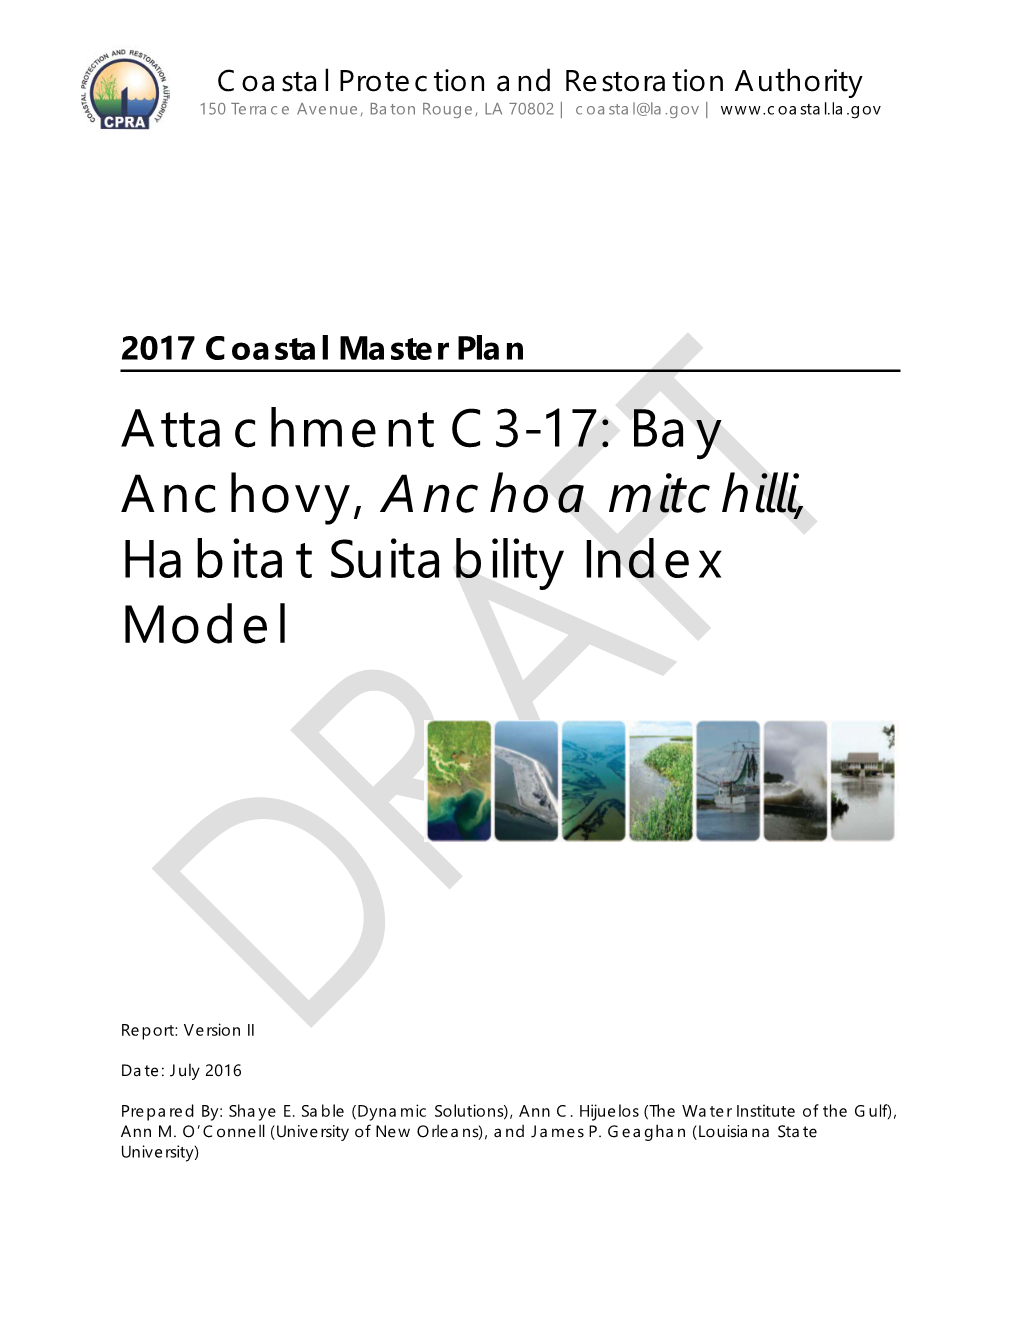 Bay Anchovy, Anchoa Mitchilli, Habitat Suitability Index Model